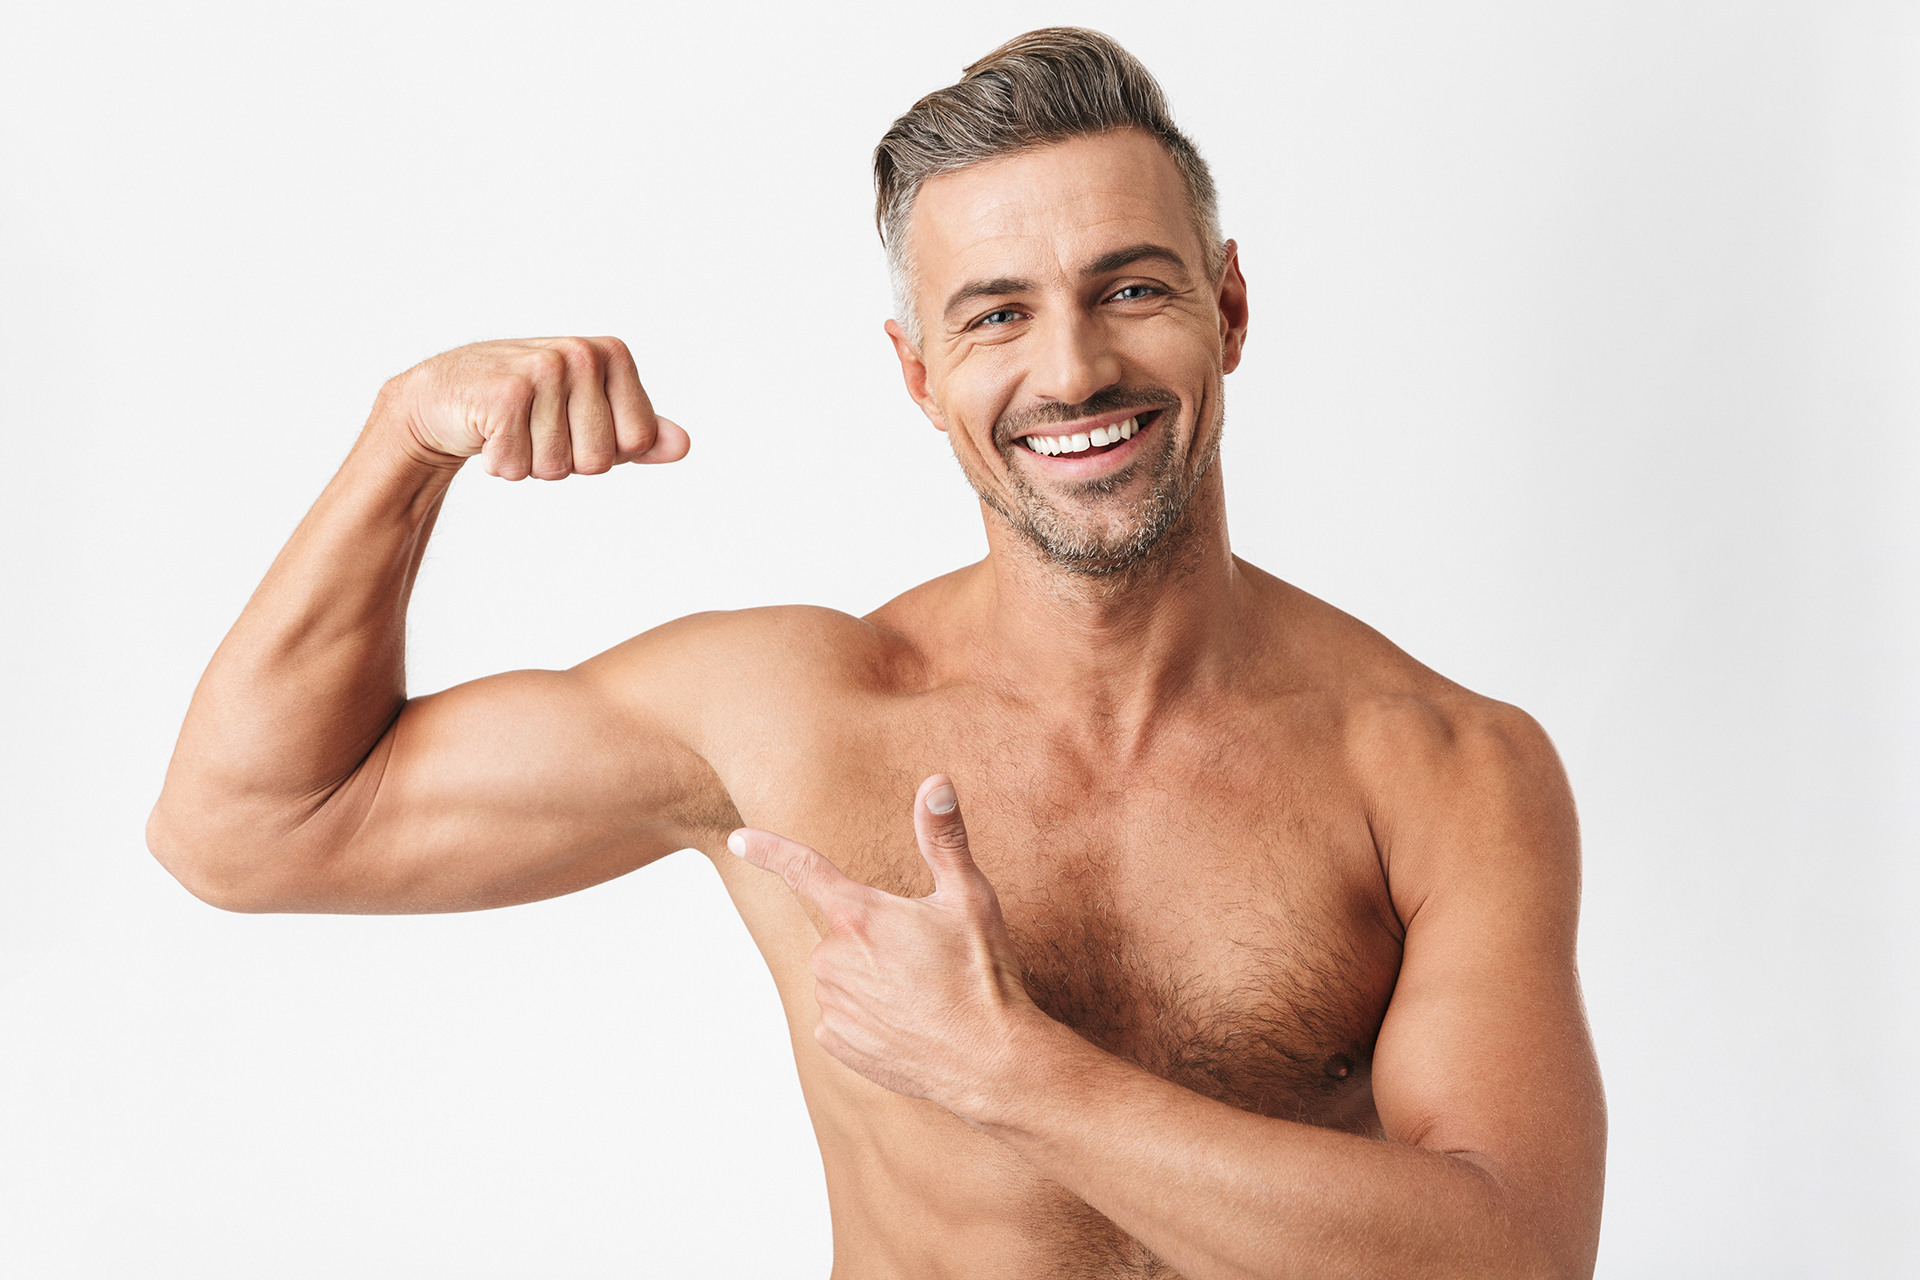 Shaved armpits help men smell fresh